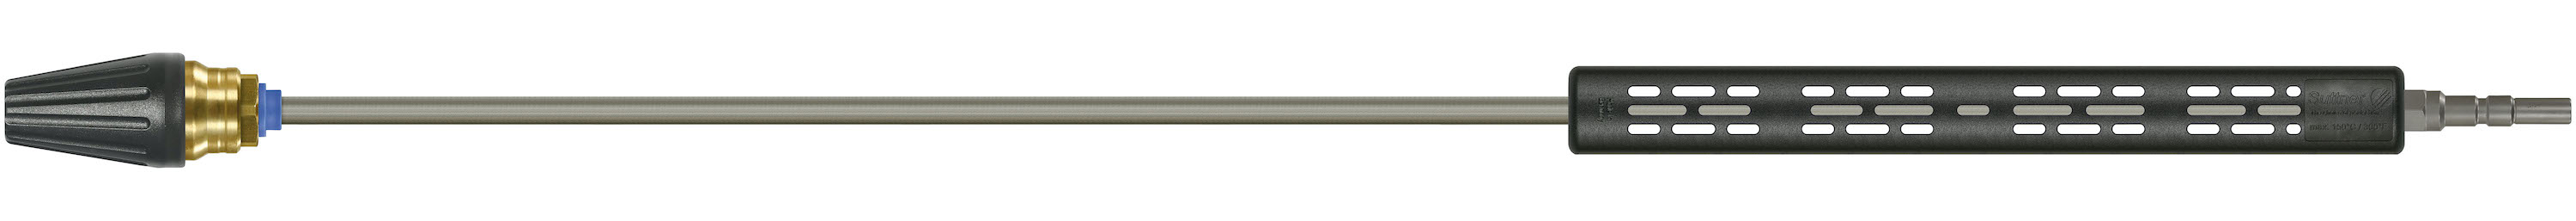 Lance tube inox avec demi-coquilles raccord KW ST-9 380 mm et rotabuse ST-458.1. Cône 20°. 200 - 400 bar. Max. 100 °C